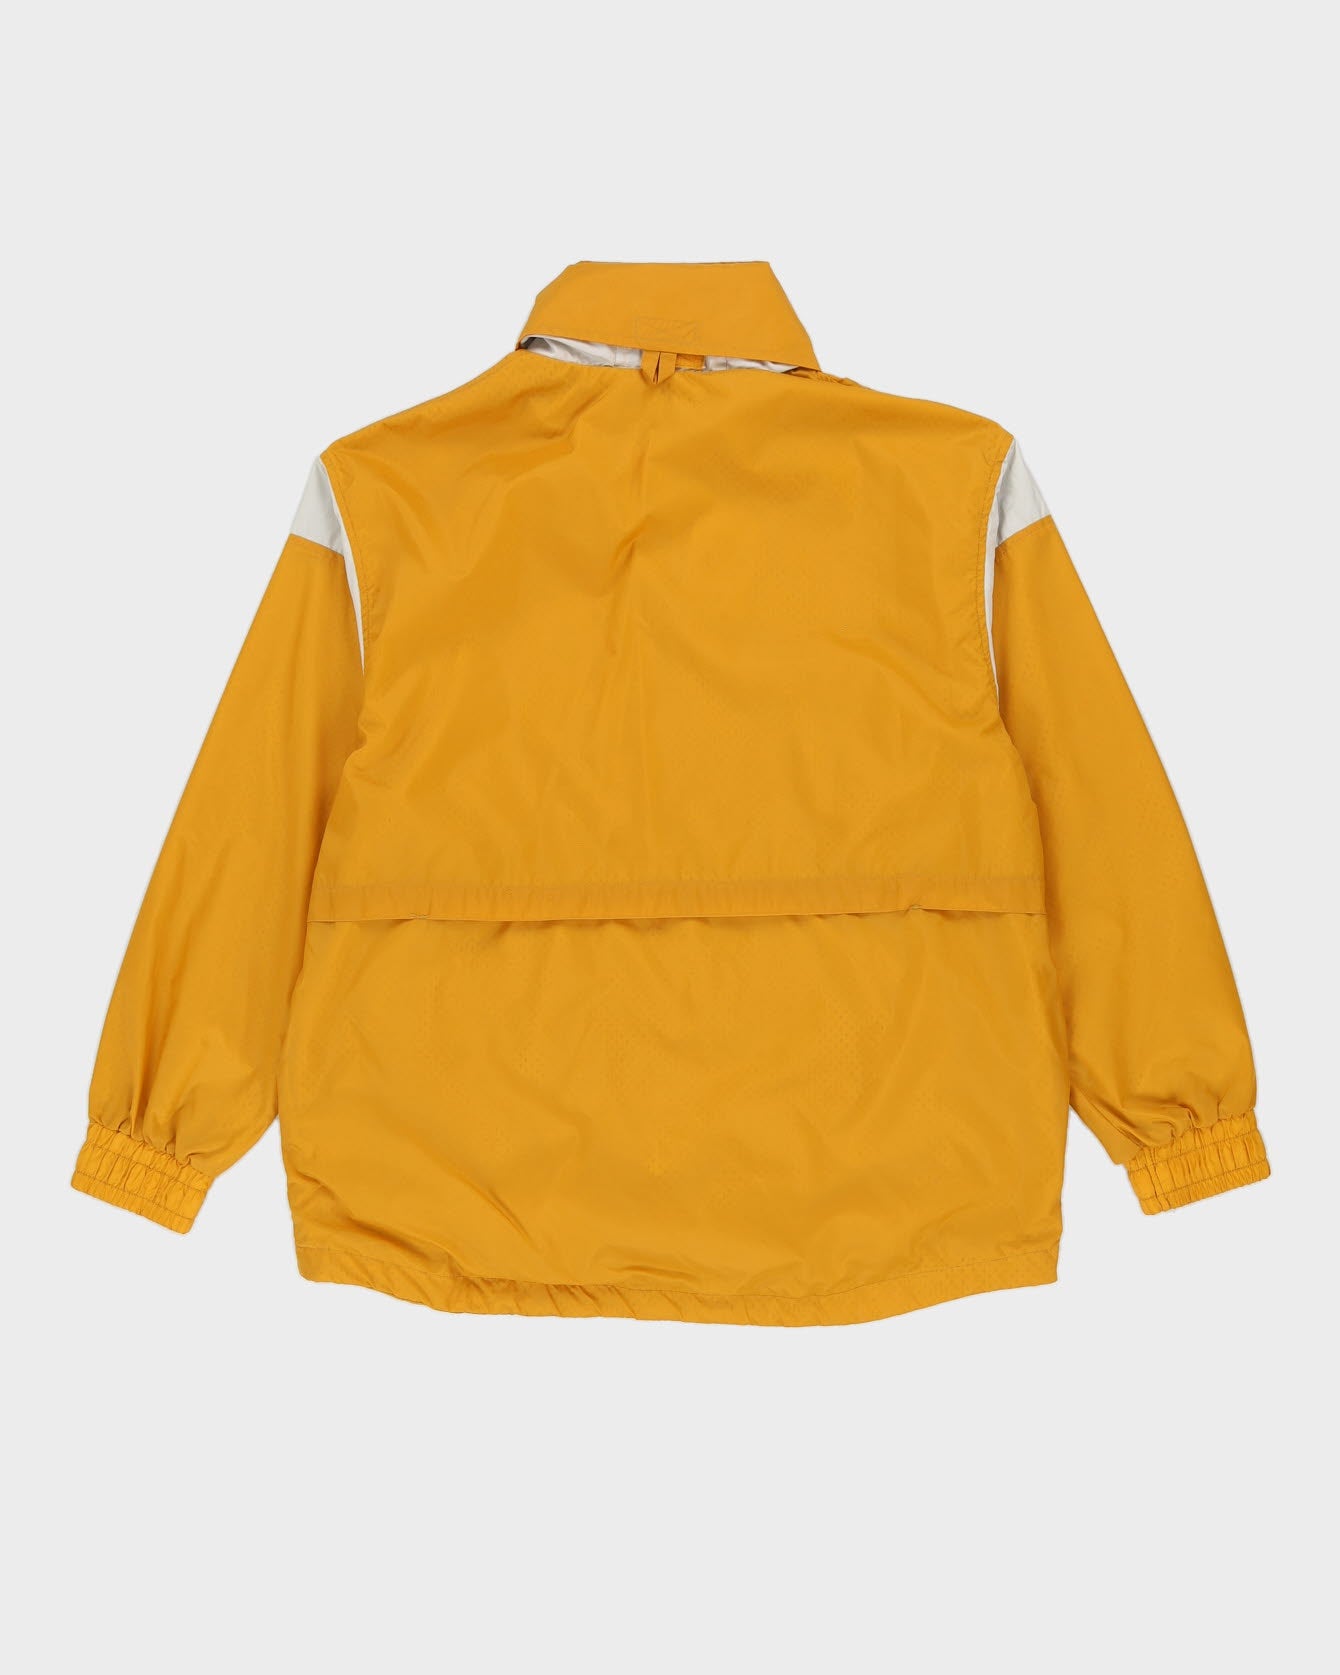 Vintage 90s Nike Yellow Quarter Zip Windbreaker Jacket - M